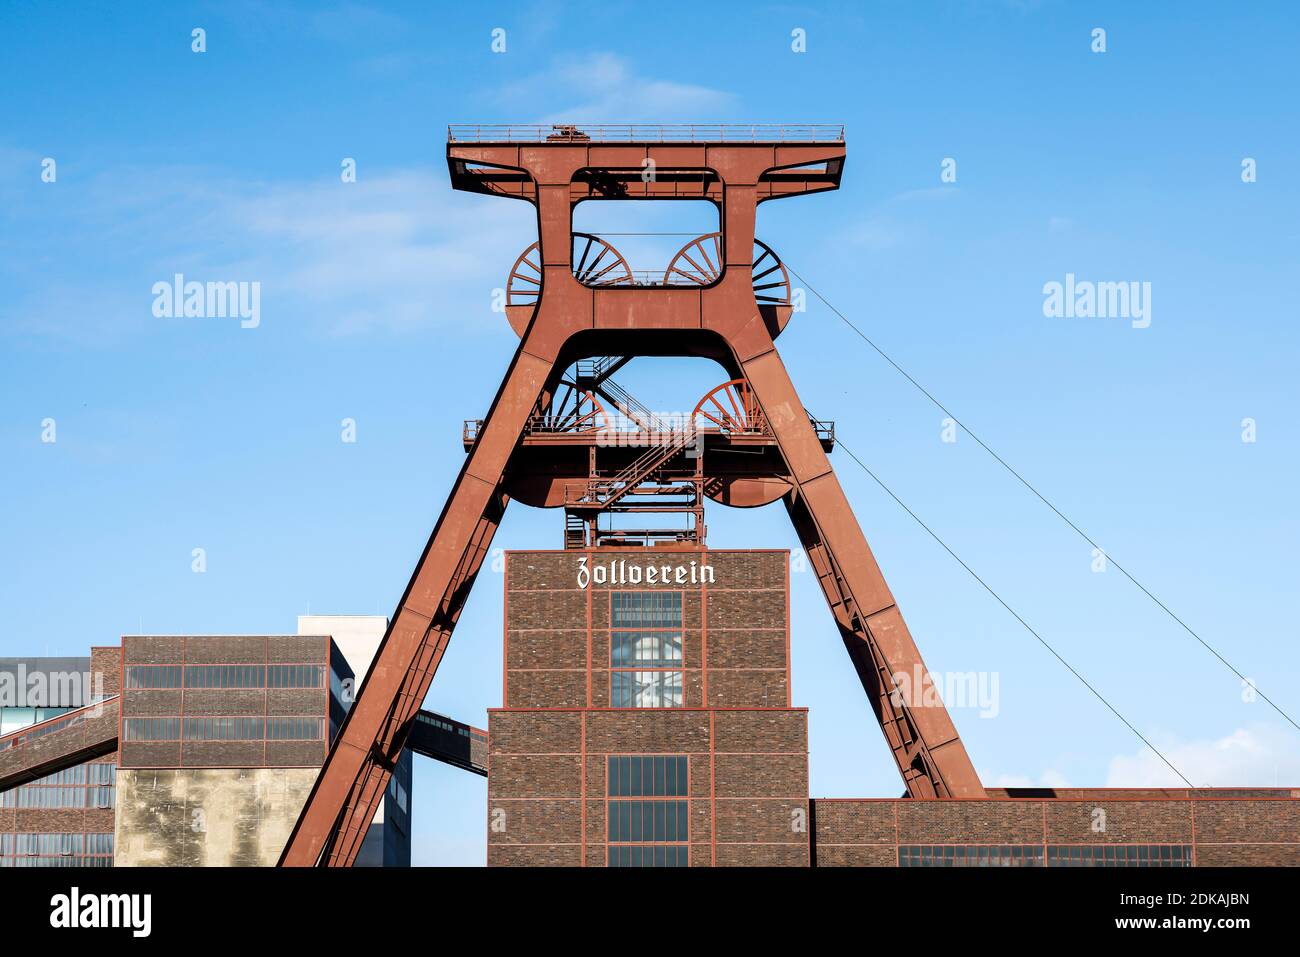 Essen, Ruhrgebiet, Nordrhein-Westfalen, Deutschland - Zeche Zollverein, UNESCO Weltkulturerbe Zollverein, Förderturm. Stockfoto